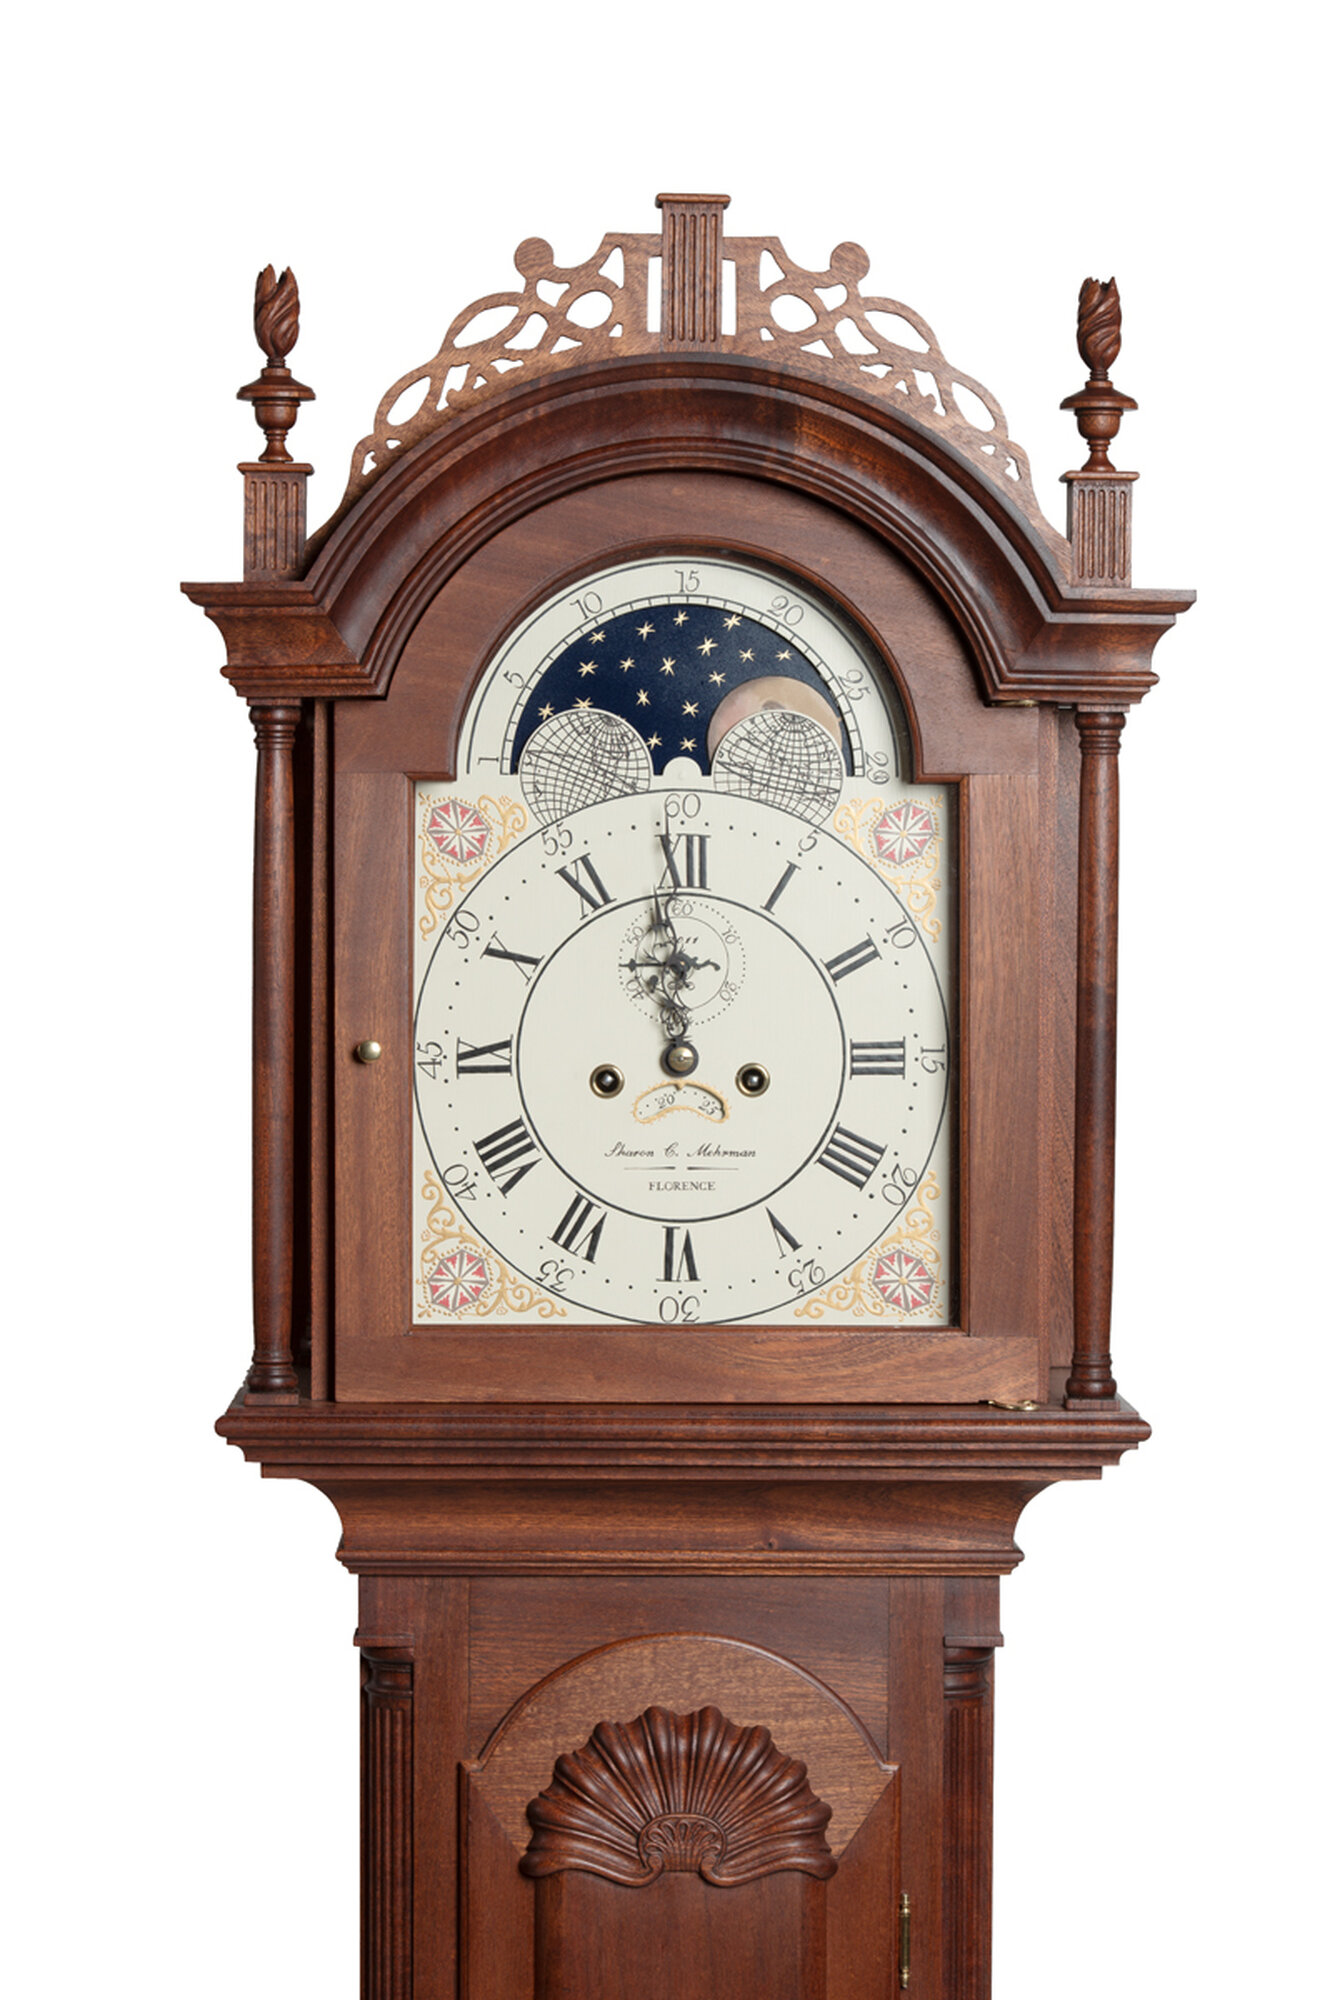 Tall Case Clock detail